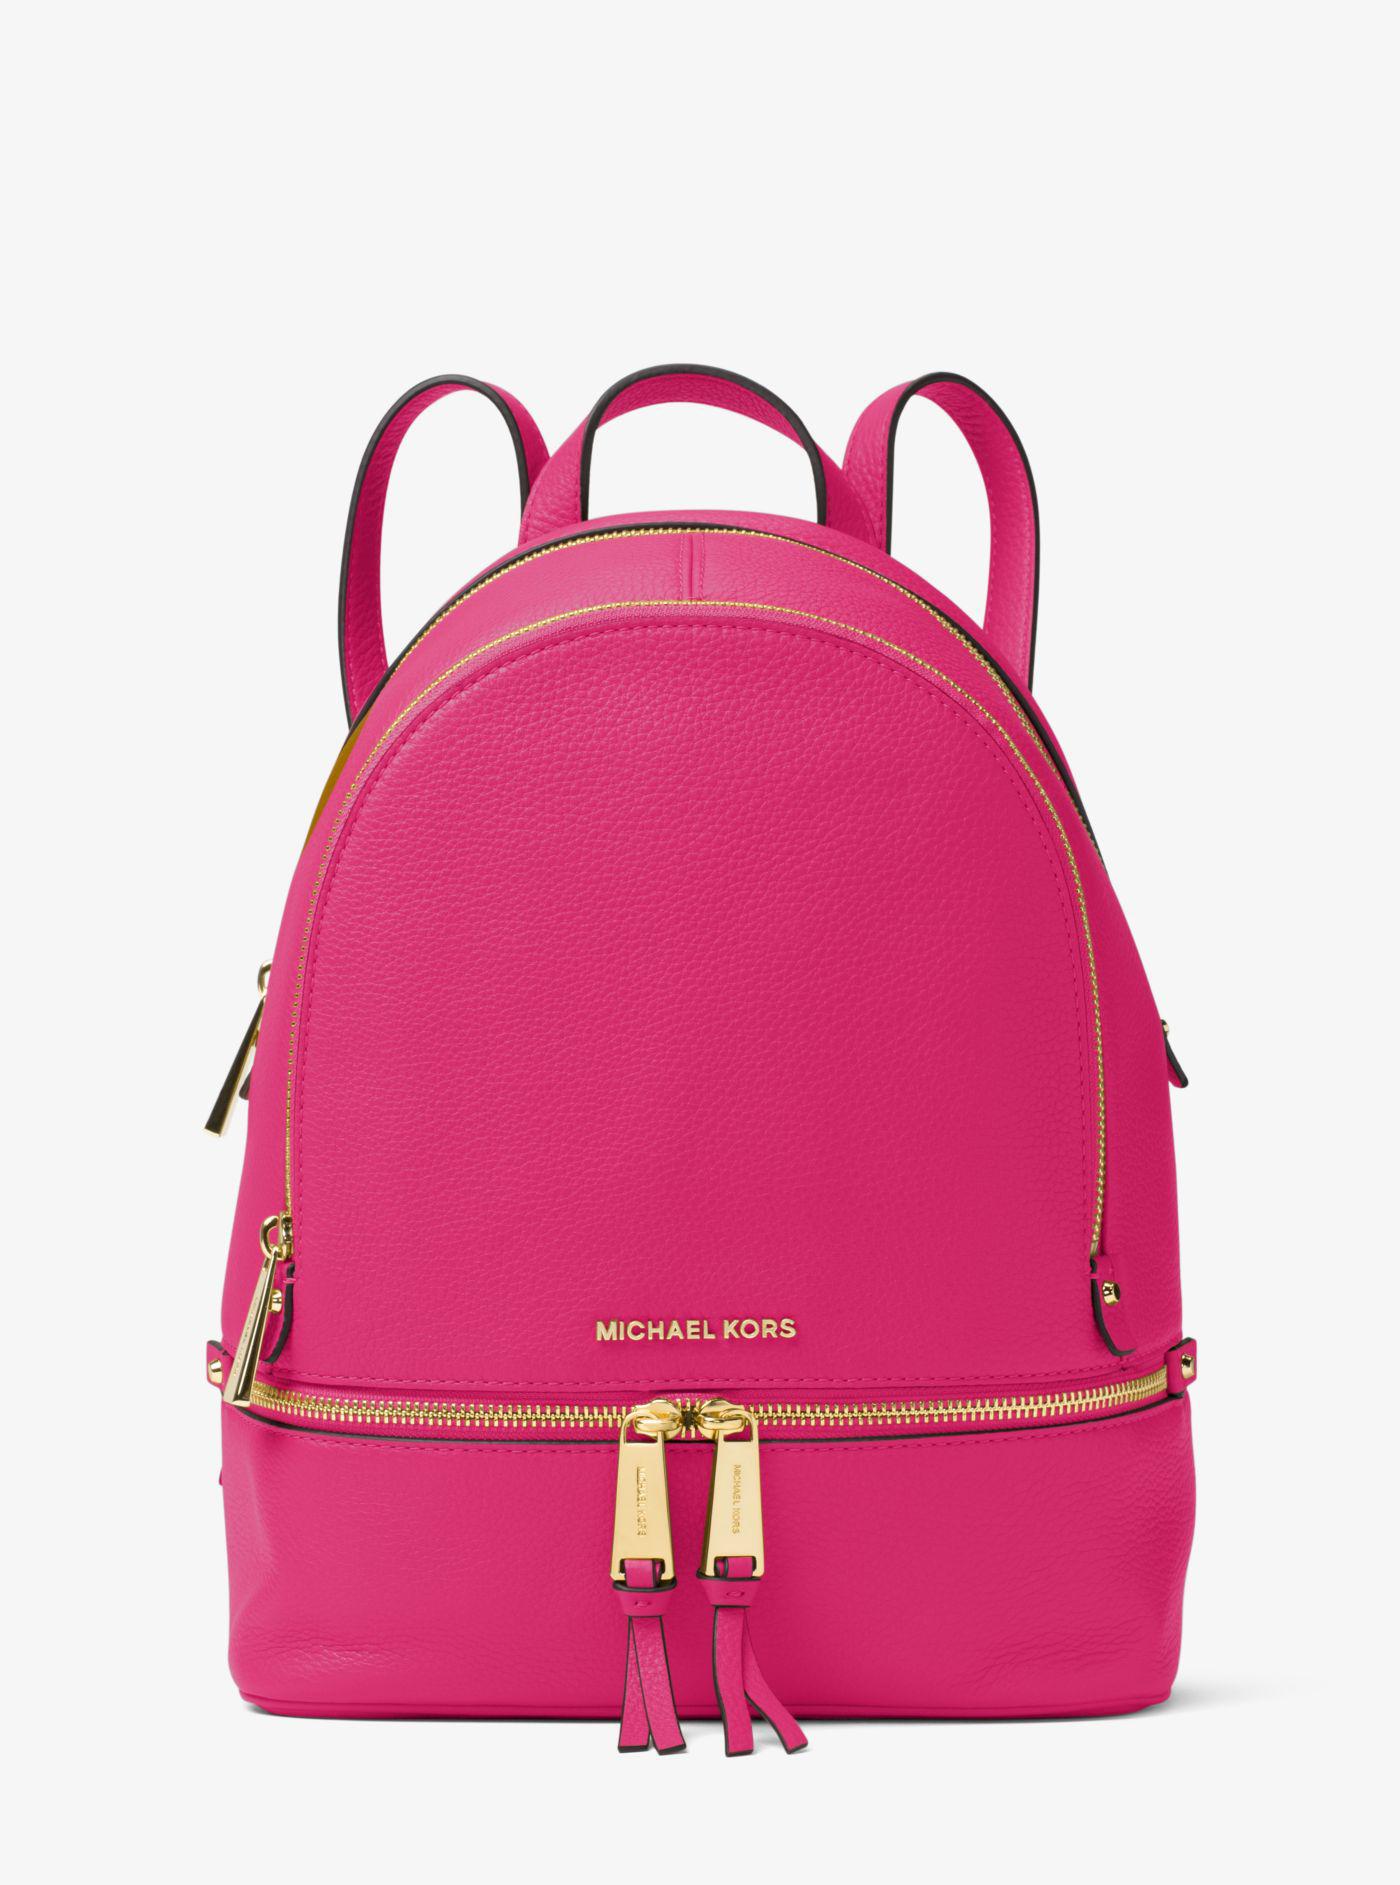 Michael Kors Rhea Medium Leather Backpack in Ultra Pink (Pink) - Lyst